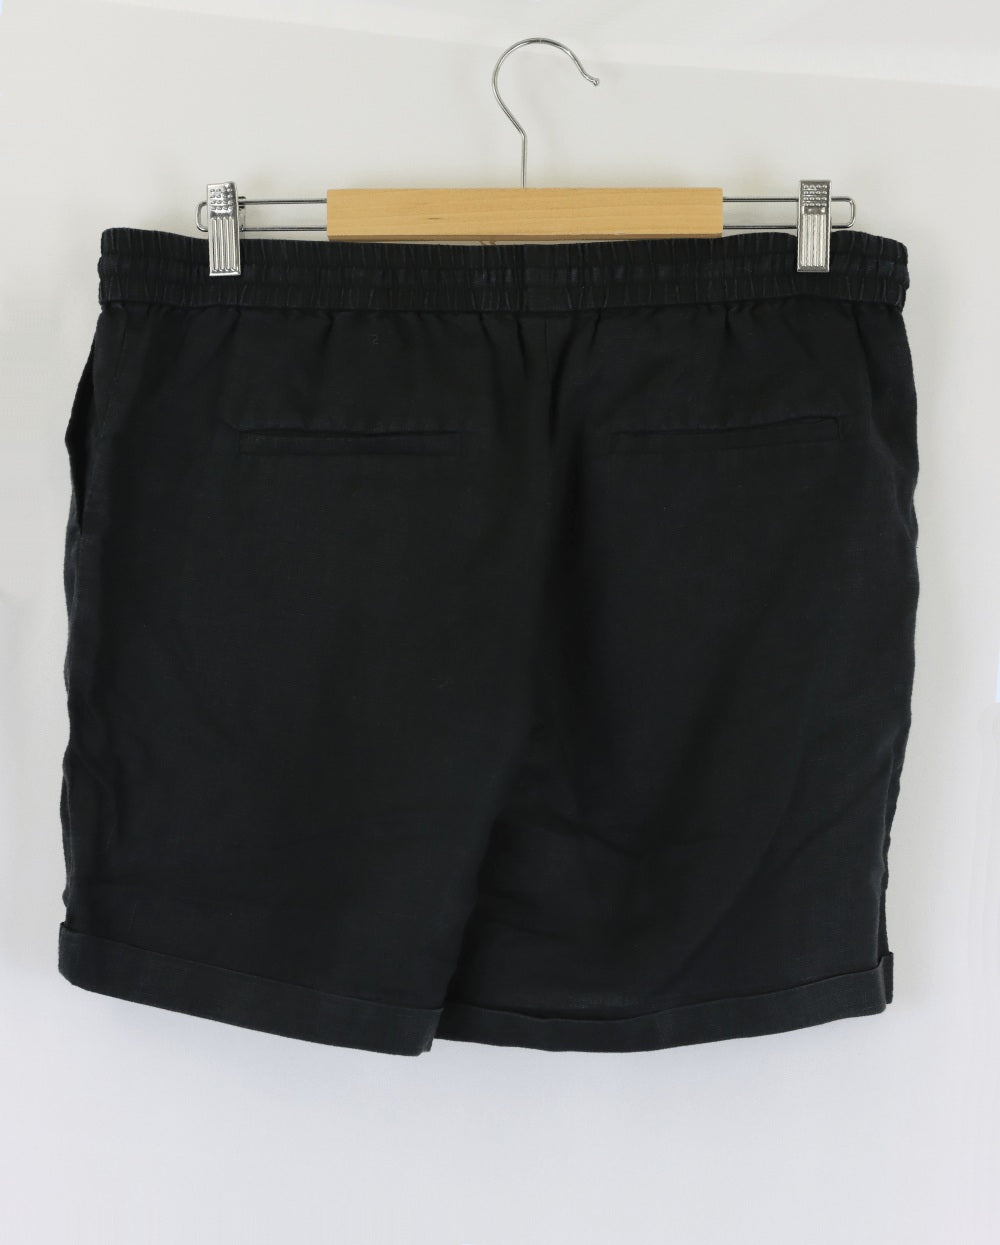 Sussan Charcoal Grey Shorts 12